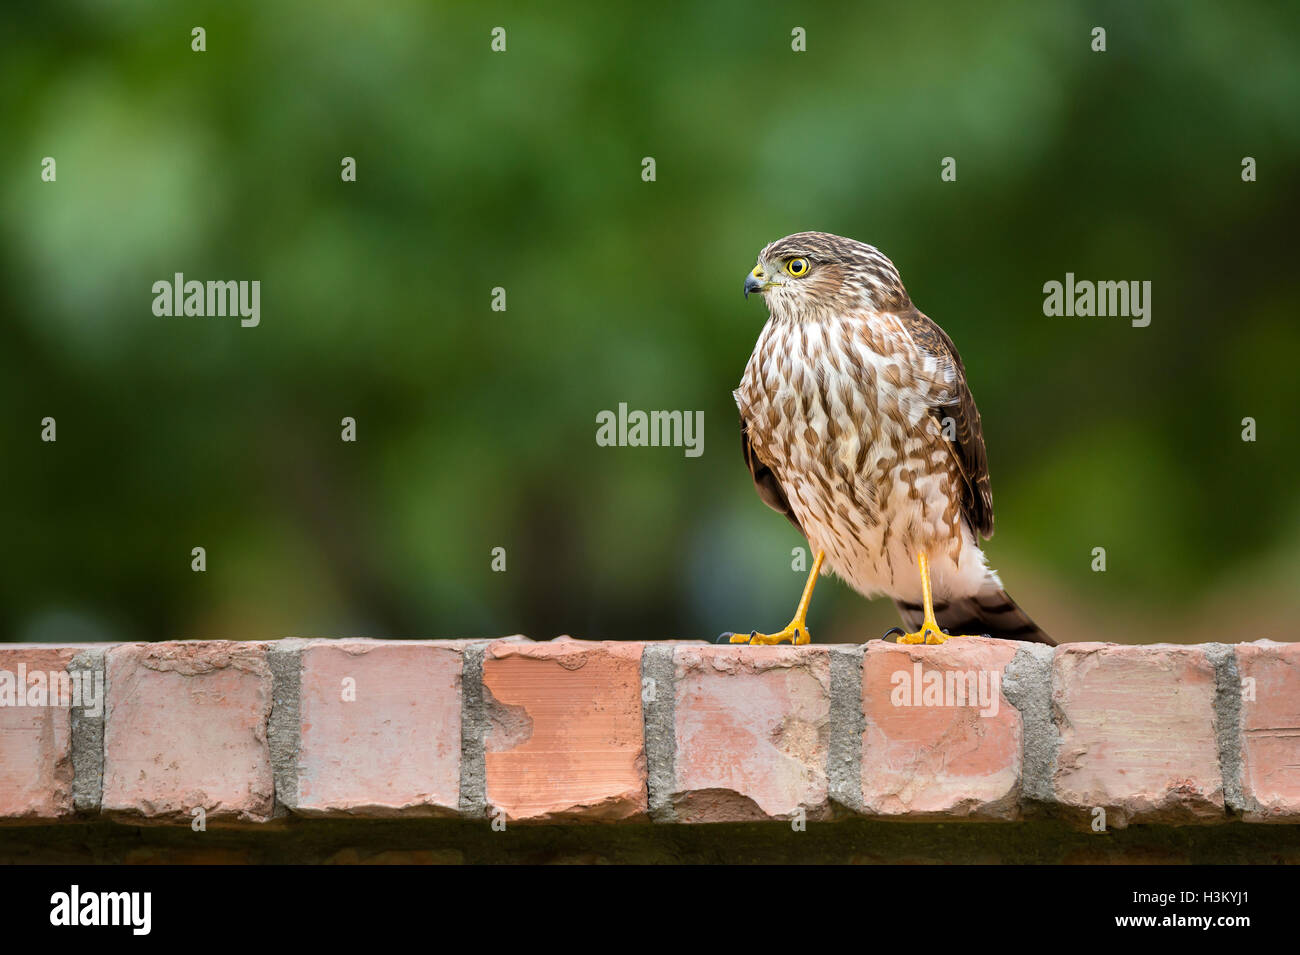 Immature Coopers Hawk standing on backyard brick fence Stock Photo